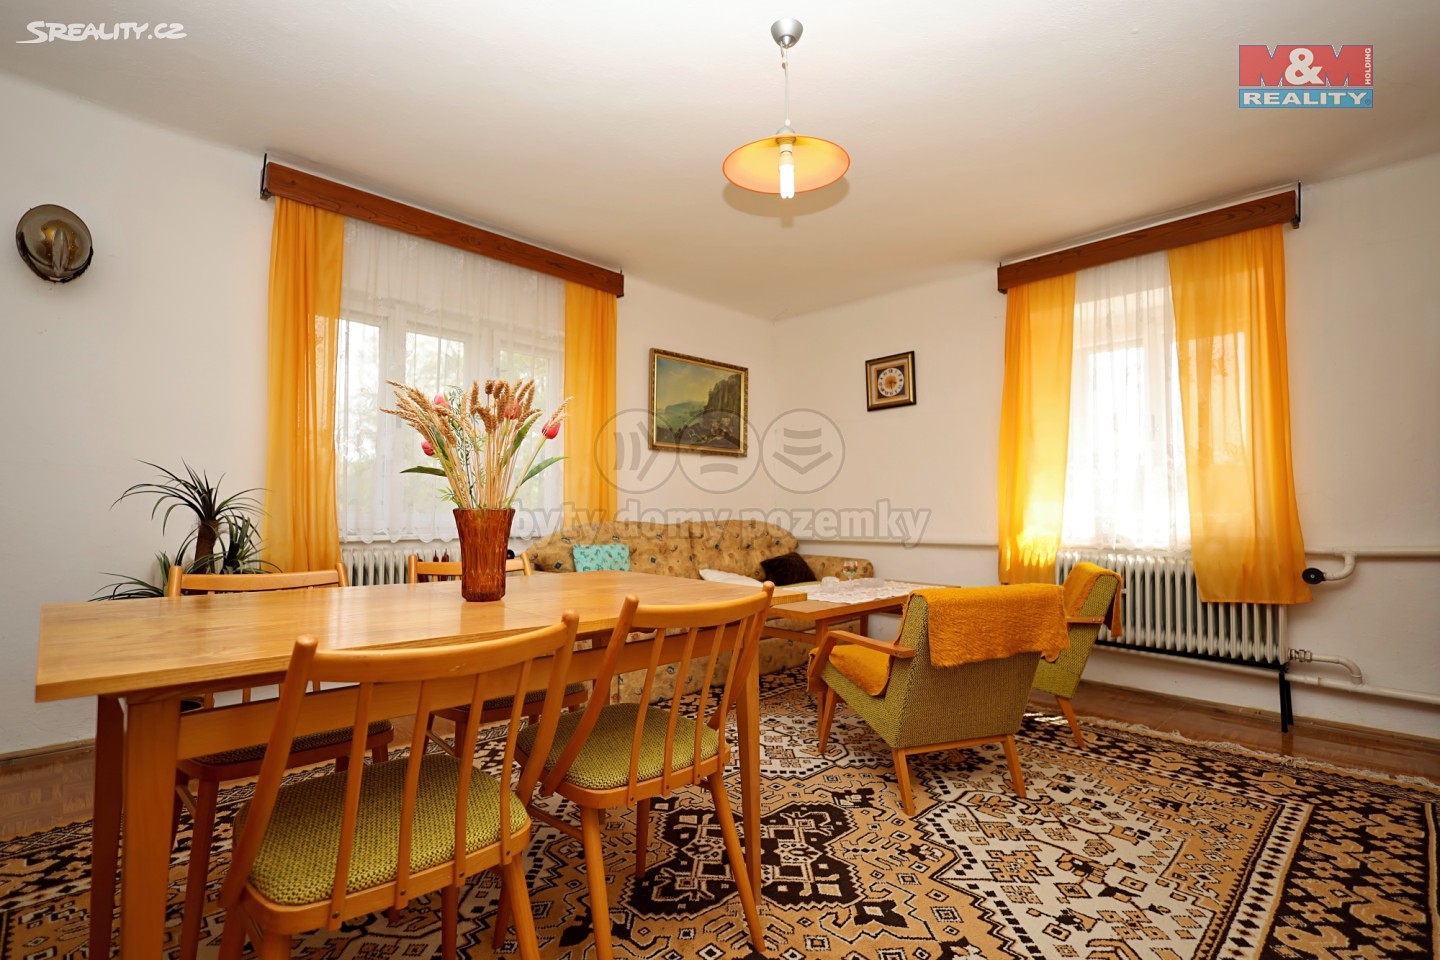 Prodej  rodinného domu 90 m², pozemek 230 m², Hněvkovice, okres Havlíčkův Brod